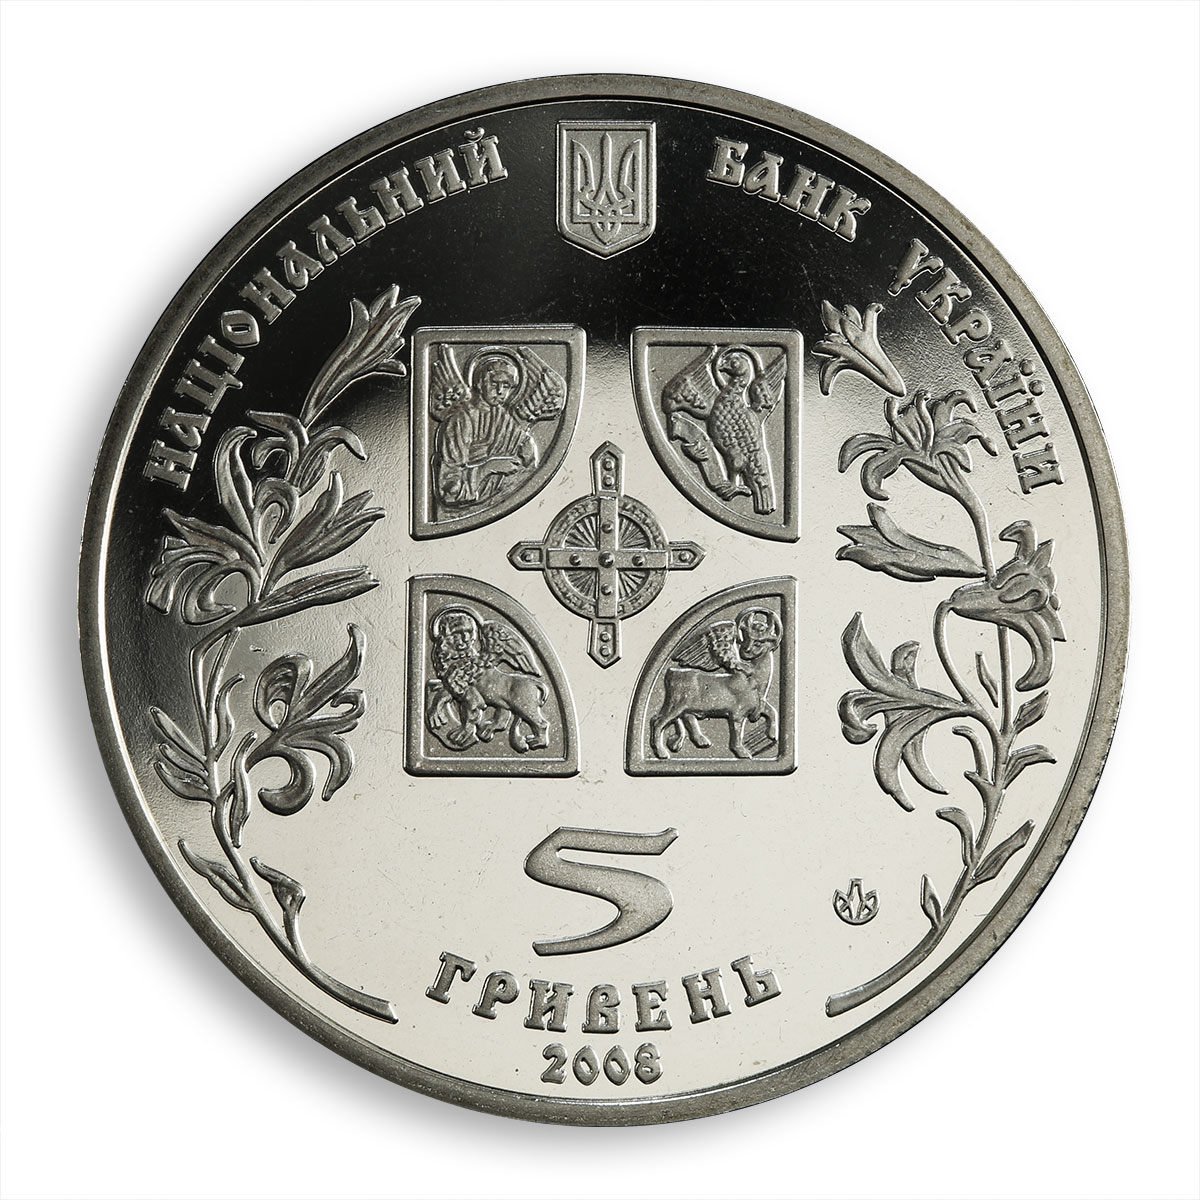 Ukraine 5 hryvnia Annunciation orthodox holiday celebration nickel coin 2008